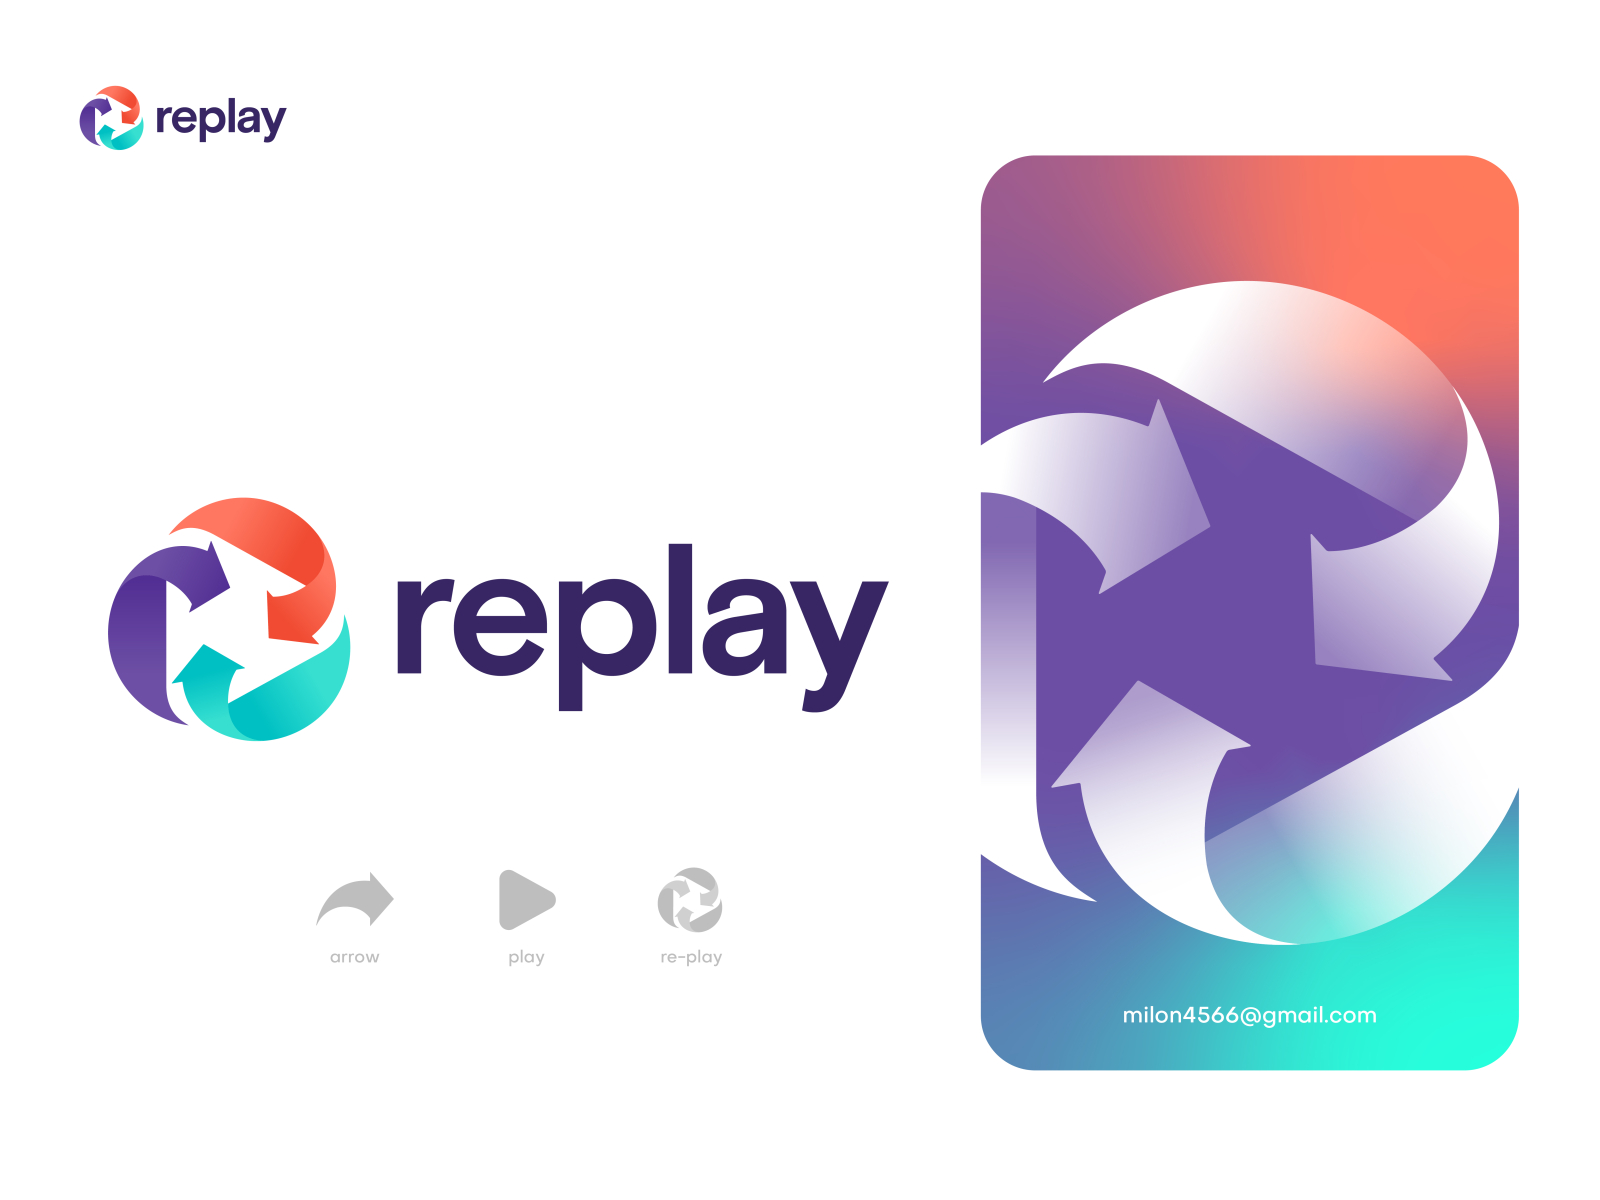 Dribbble - replay logo presentation-02.jpg by Milon Ahmed